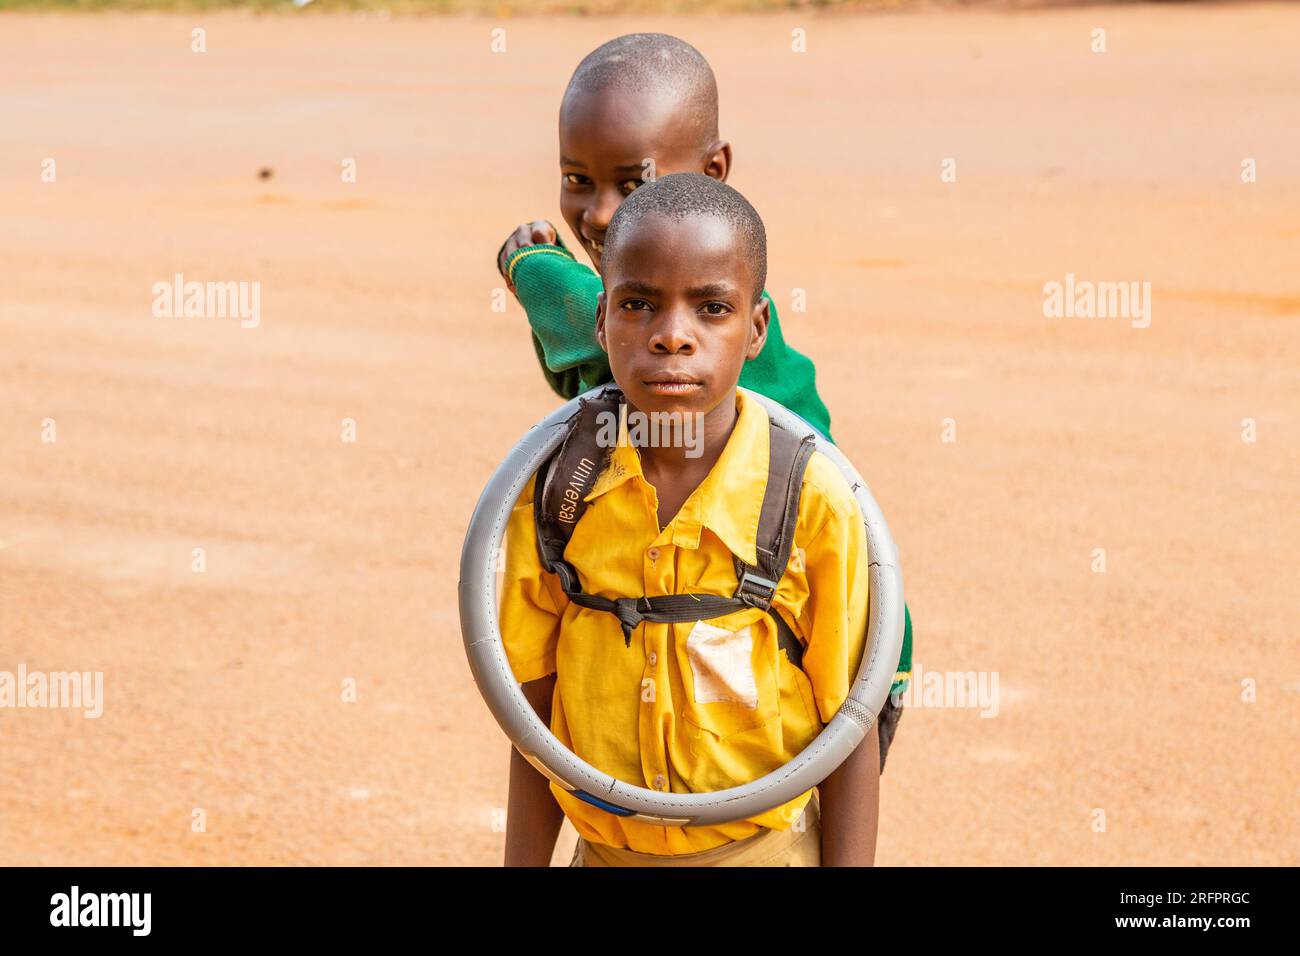 Two kids posing, one wearing a steering wheel cover around his neck. Jinja, Uganda. Stock Photo